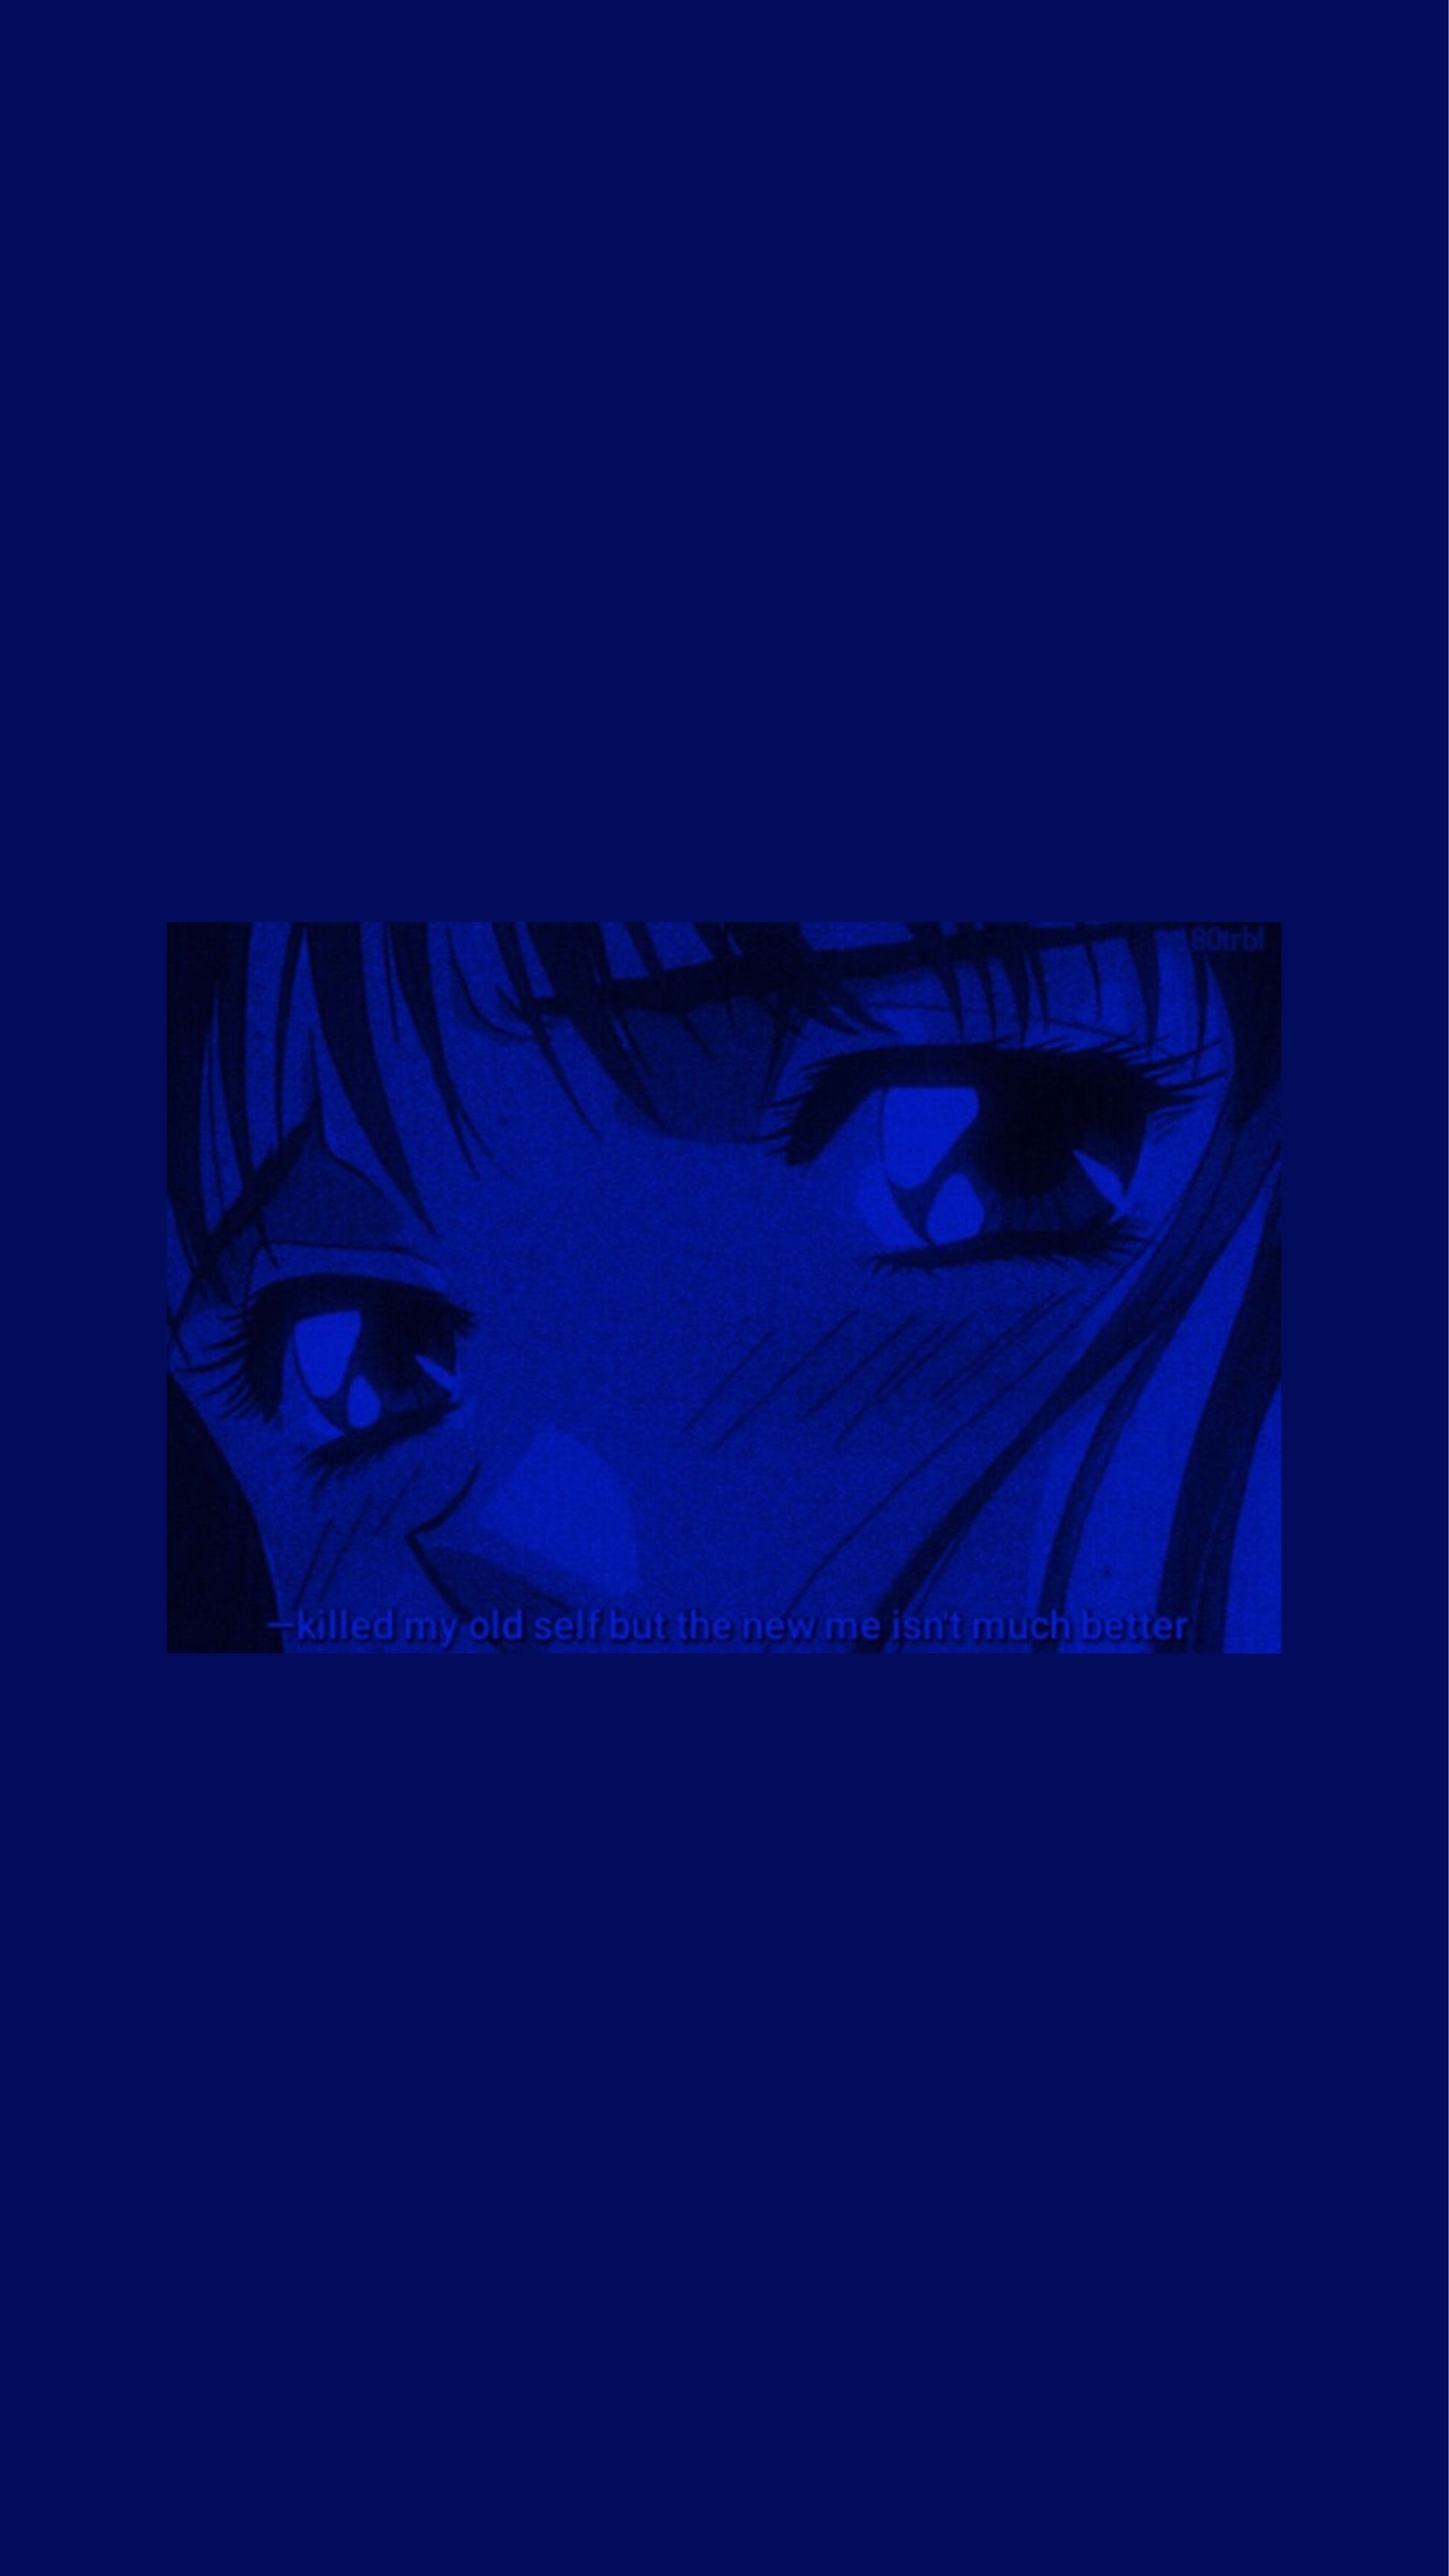 aesthetic blue dark anime Image by